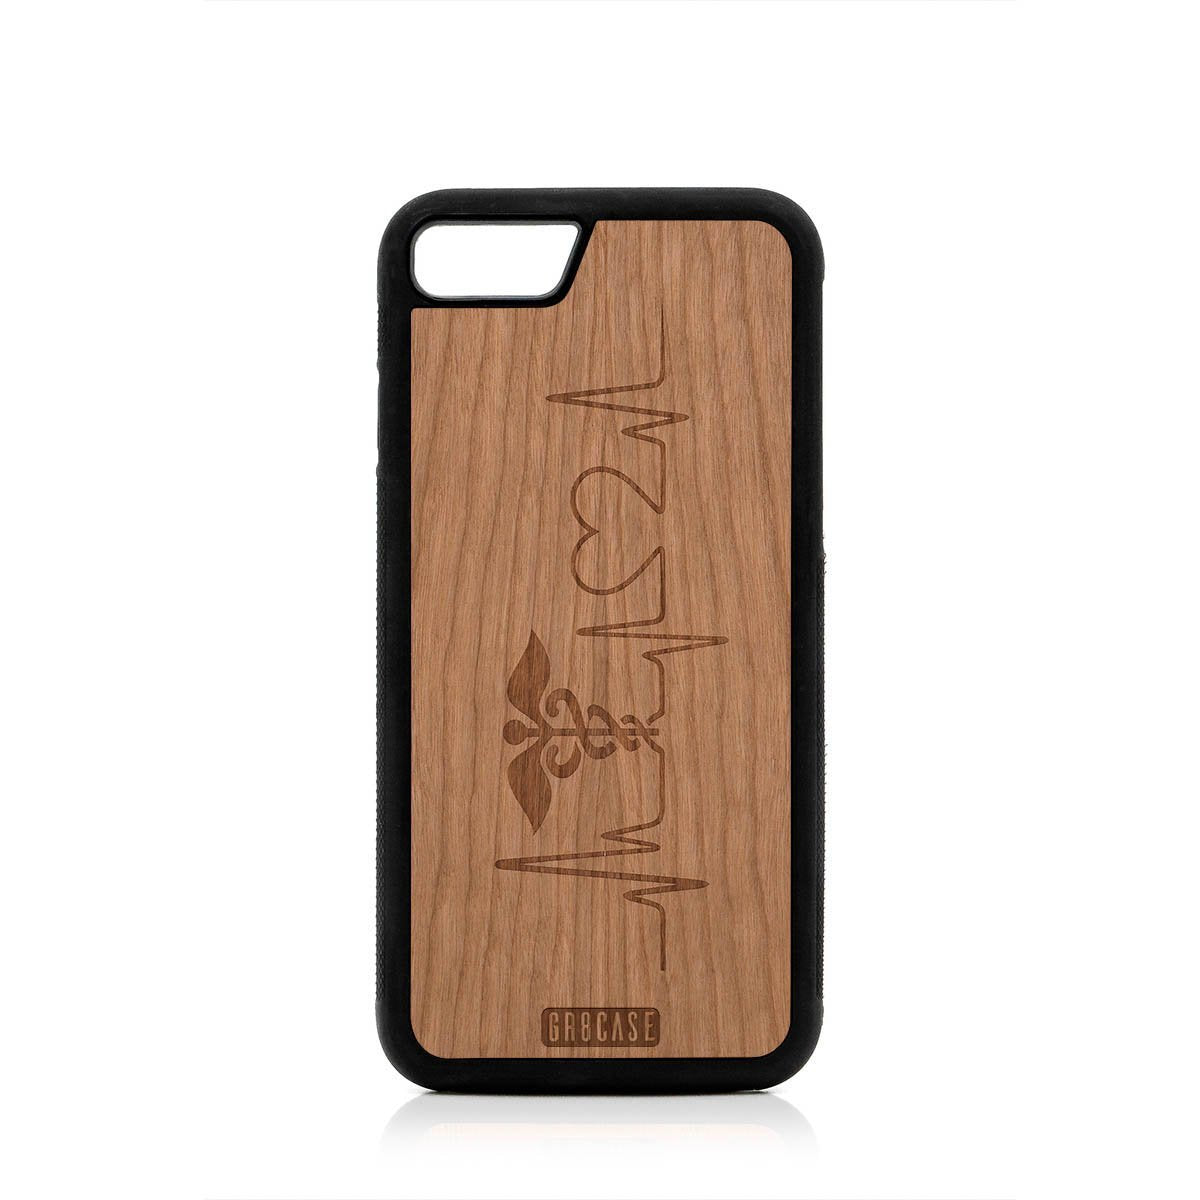 Hero's Heart (Nurse, Doctor) Design Wood Case For iPhone SE 2020 by GR8CASE